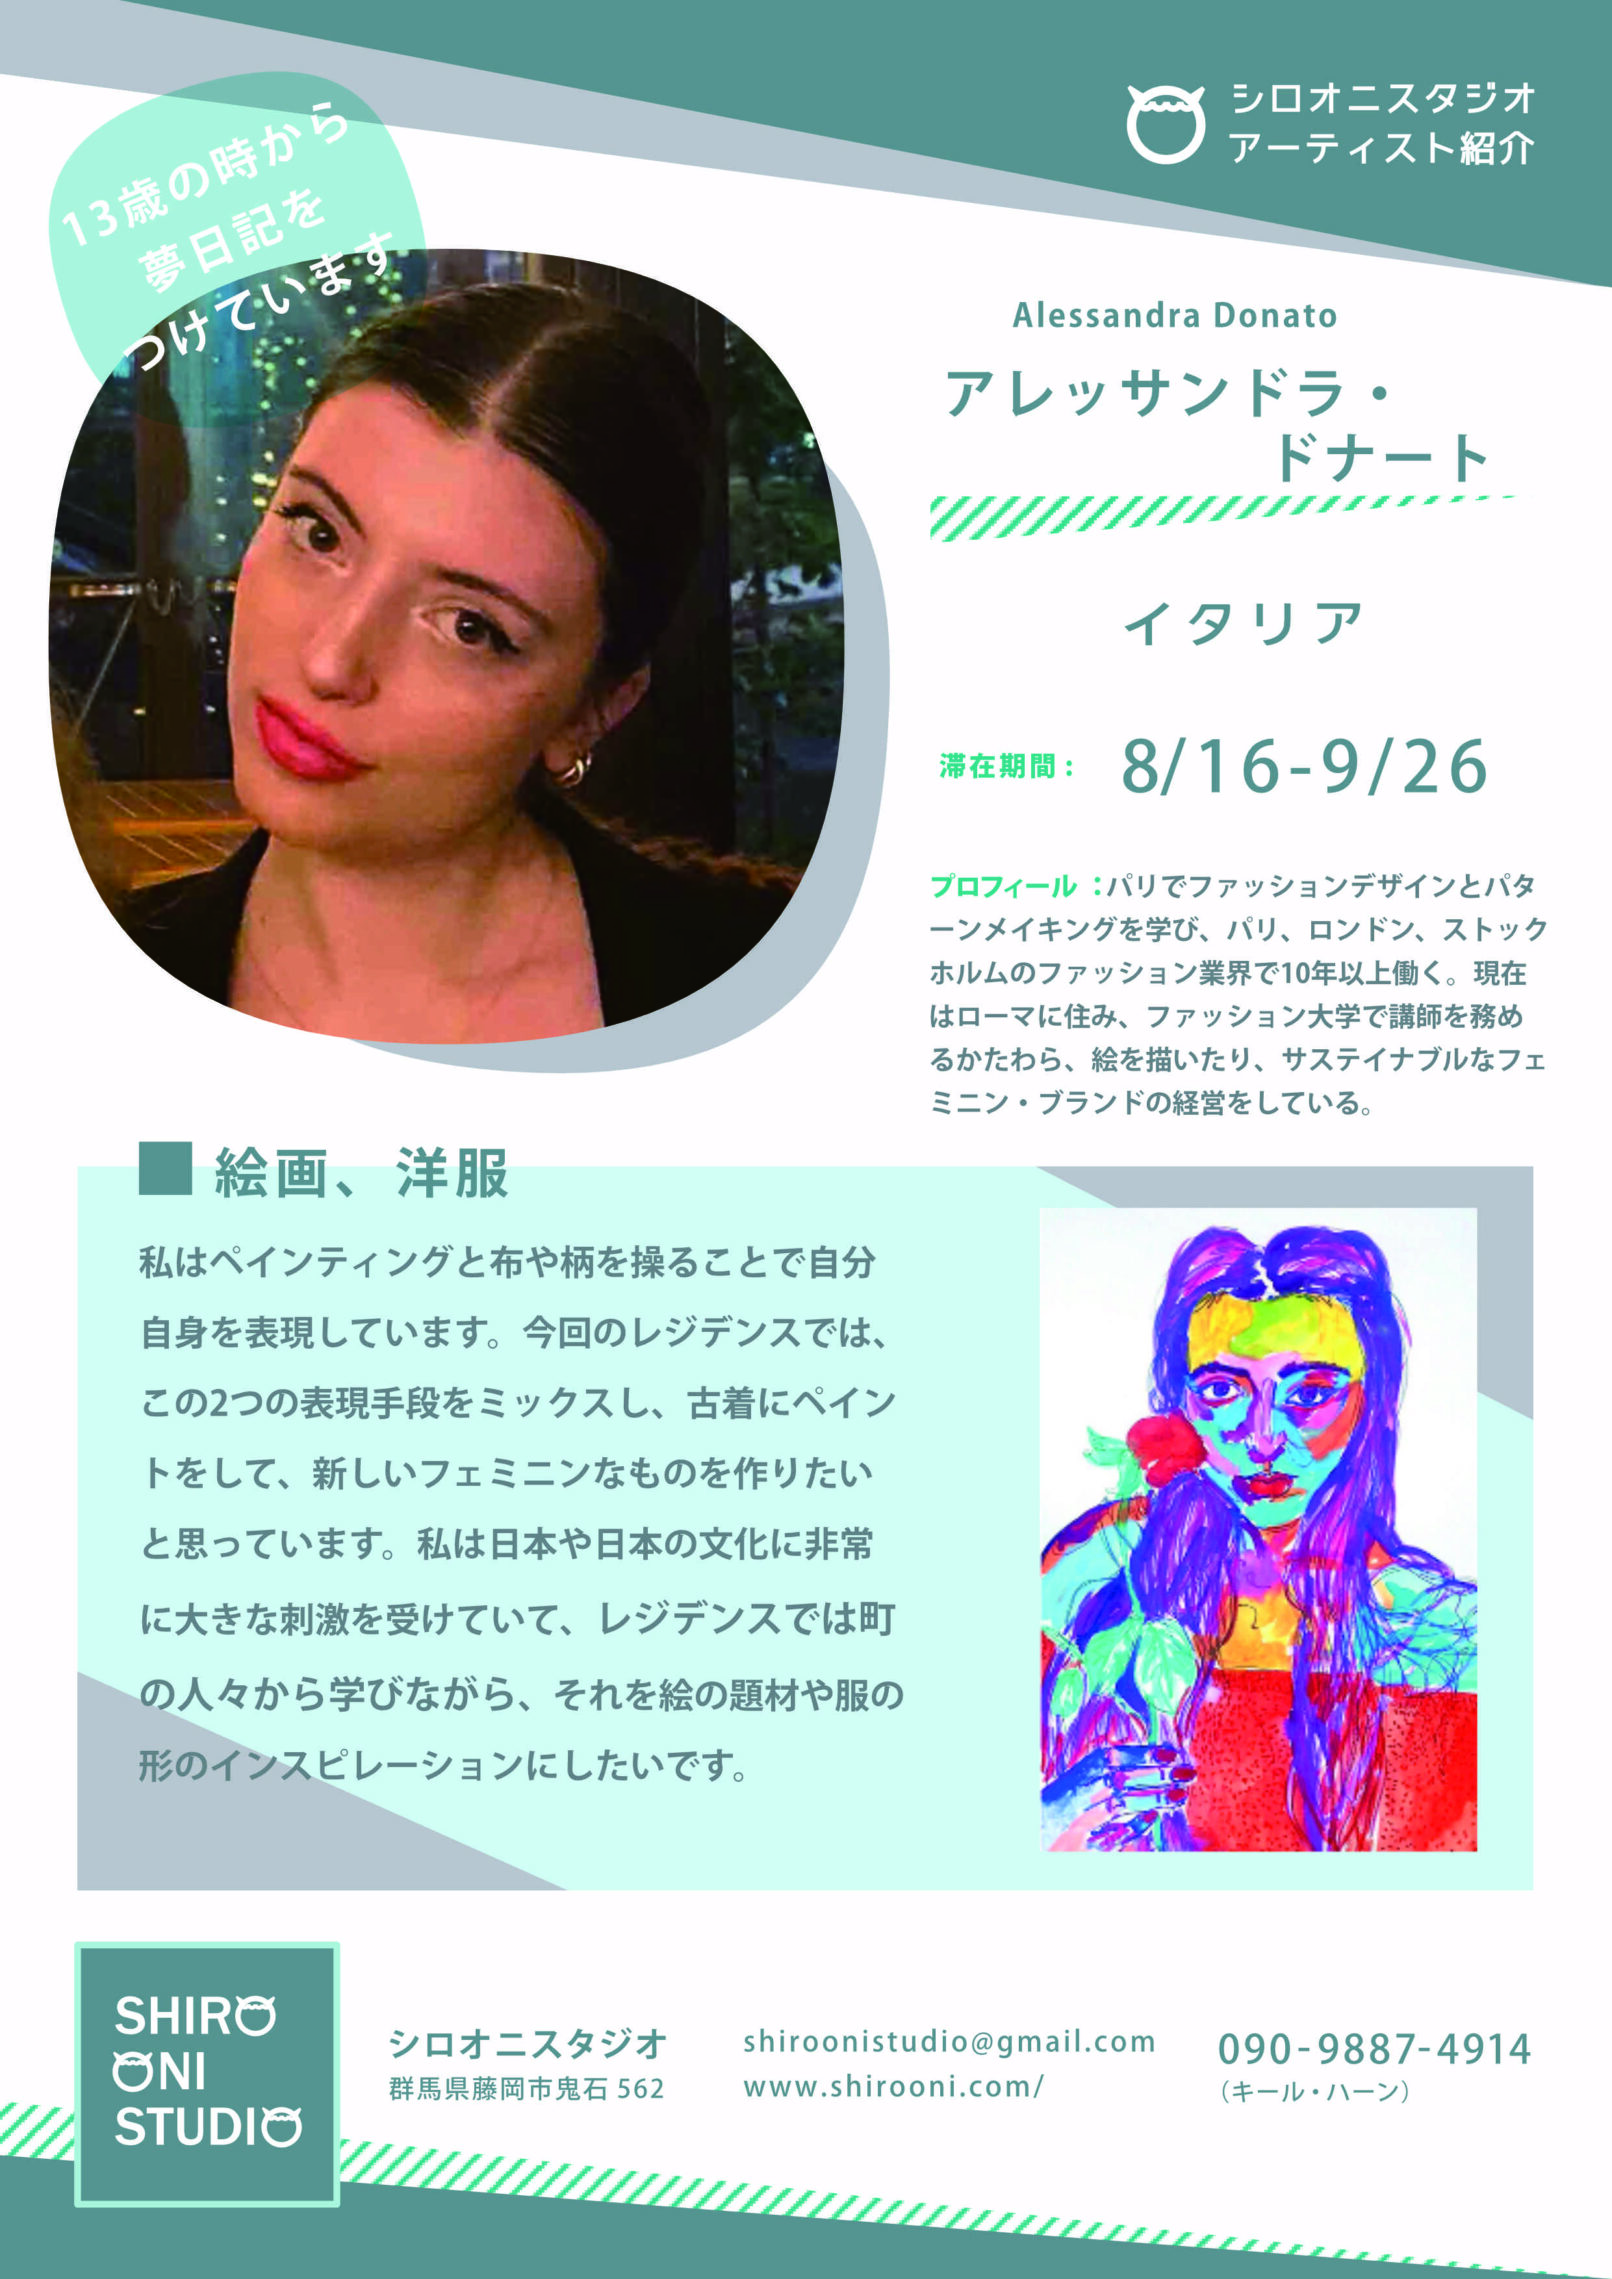 Alessandra Donato participated in the Shiro Oni Studio art residency program in Onishi Japan.